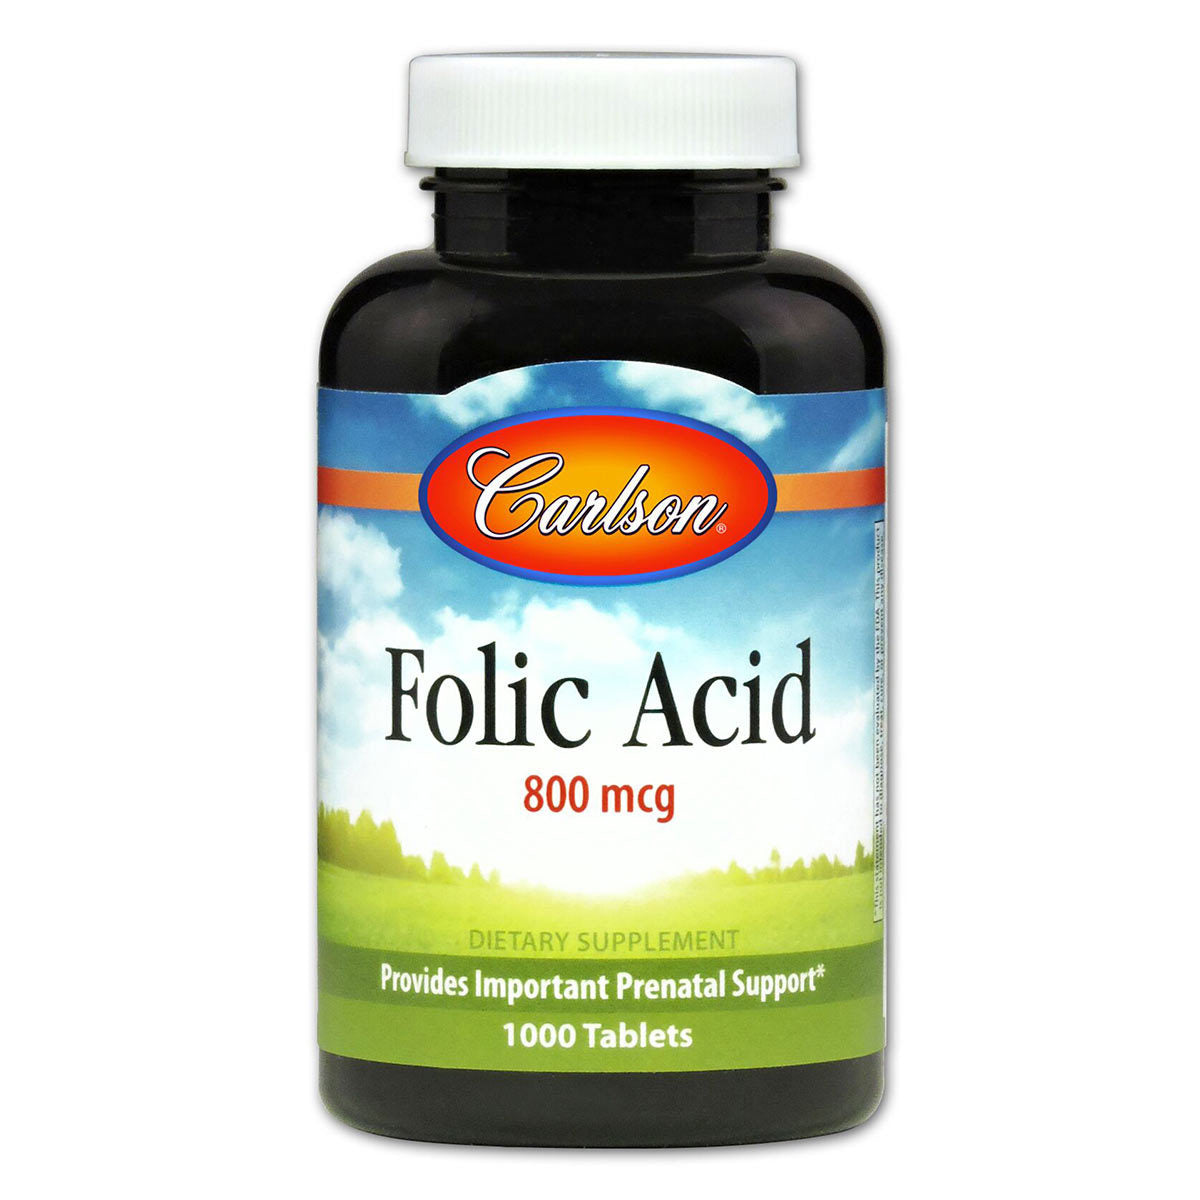 Primary image of Folic Acid 800mcg